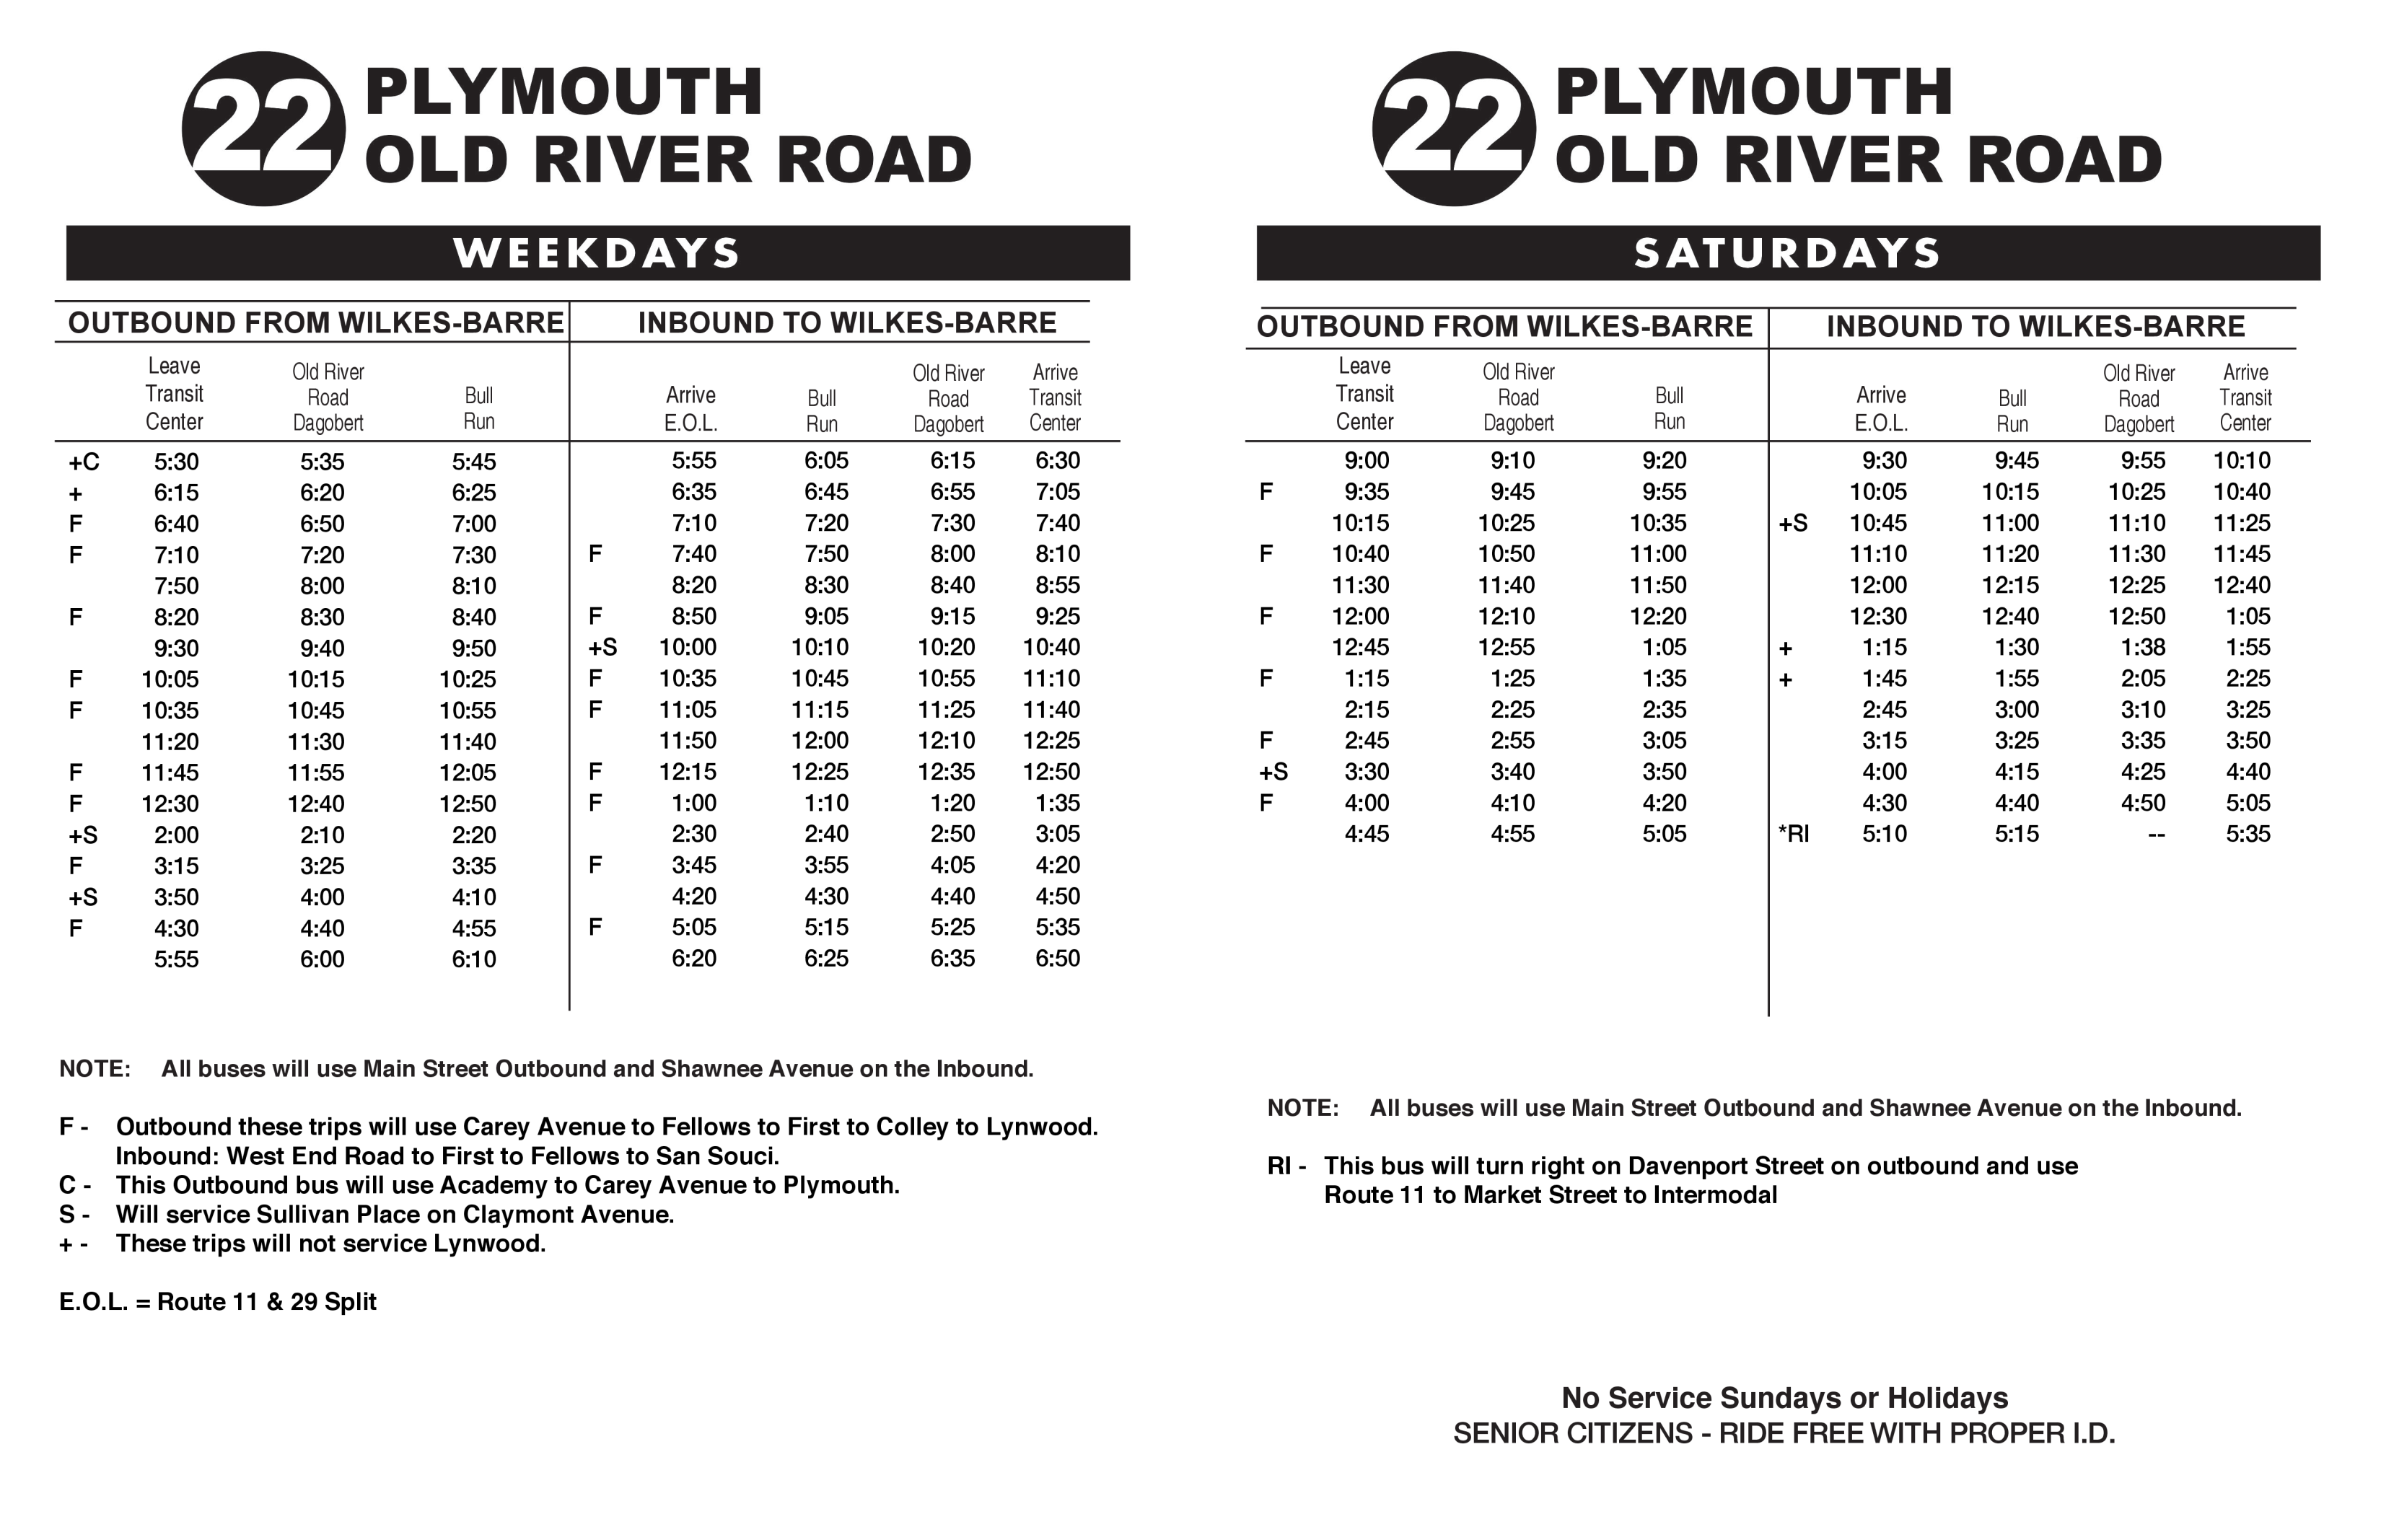 Route 22 departure tables. Effective March 23, 2020